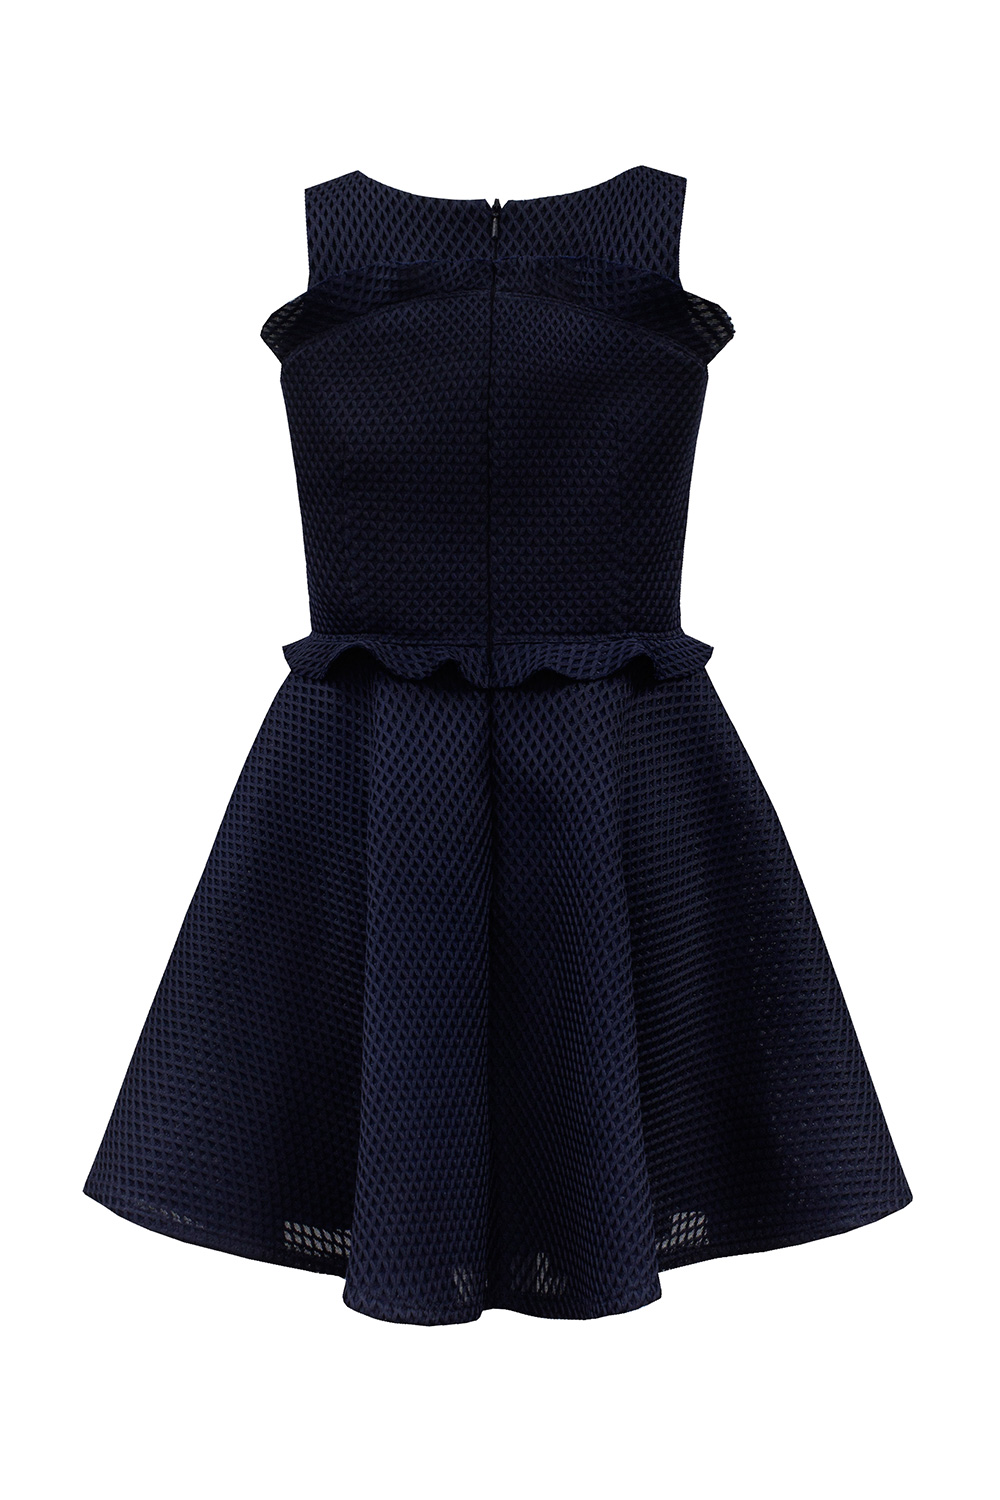 black and navy blue dress